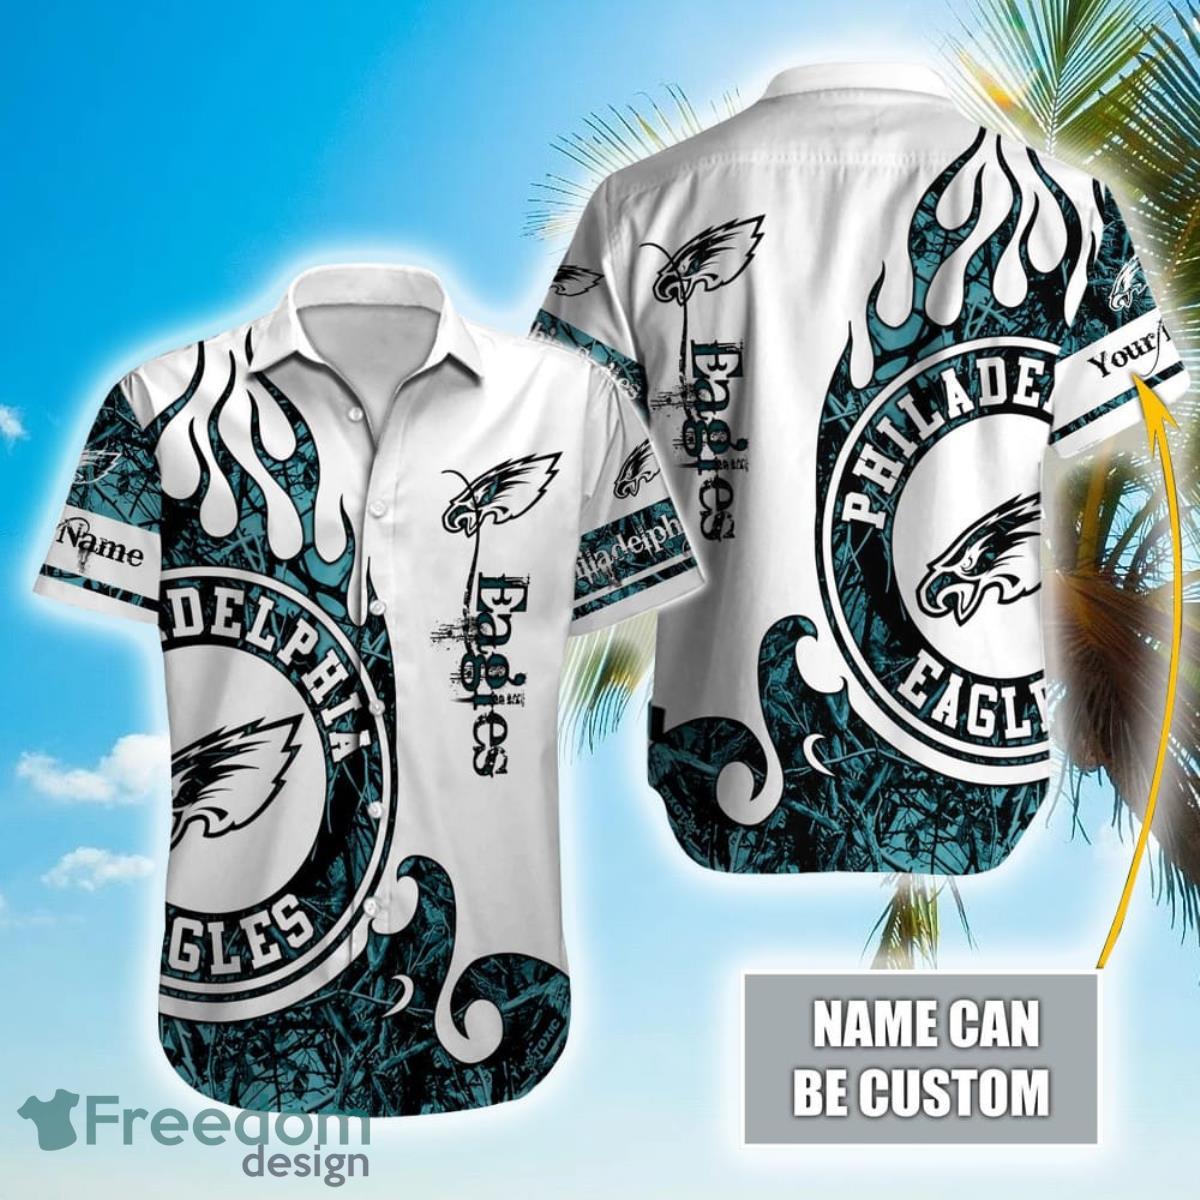 custom eagles shirt